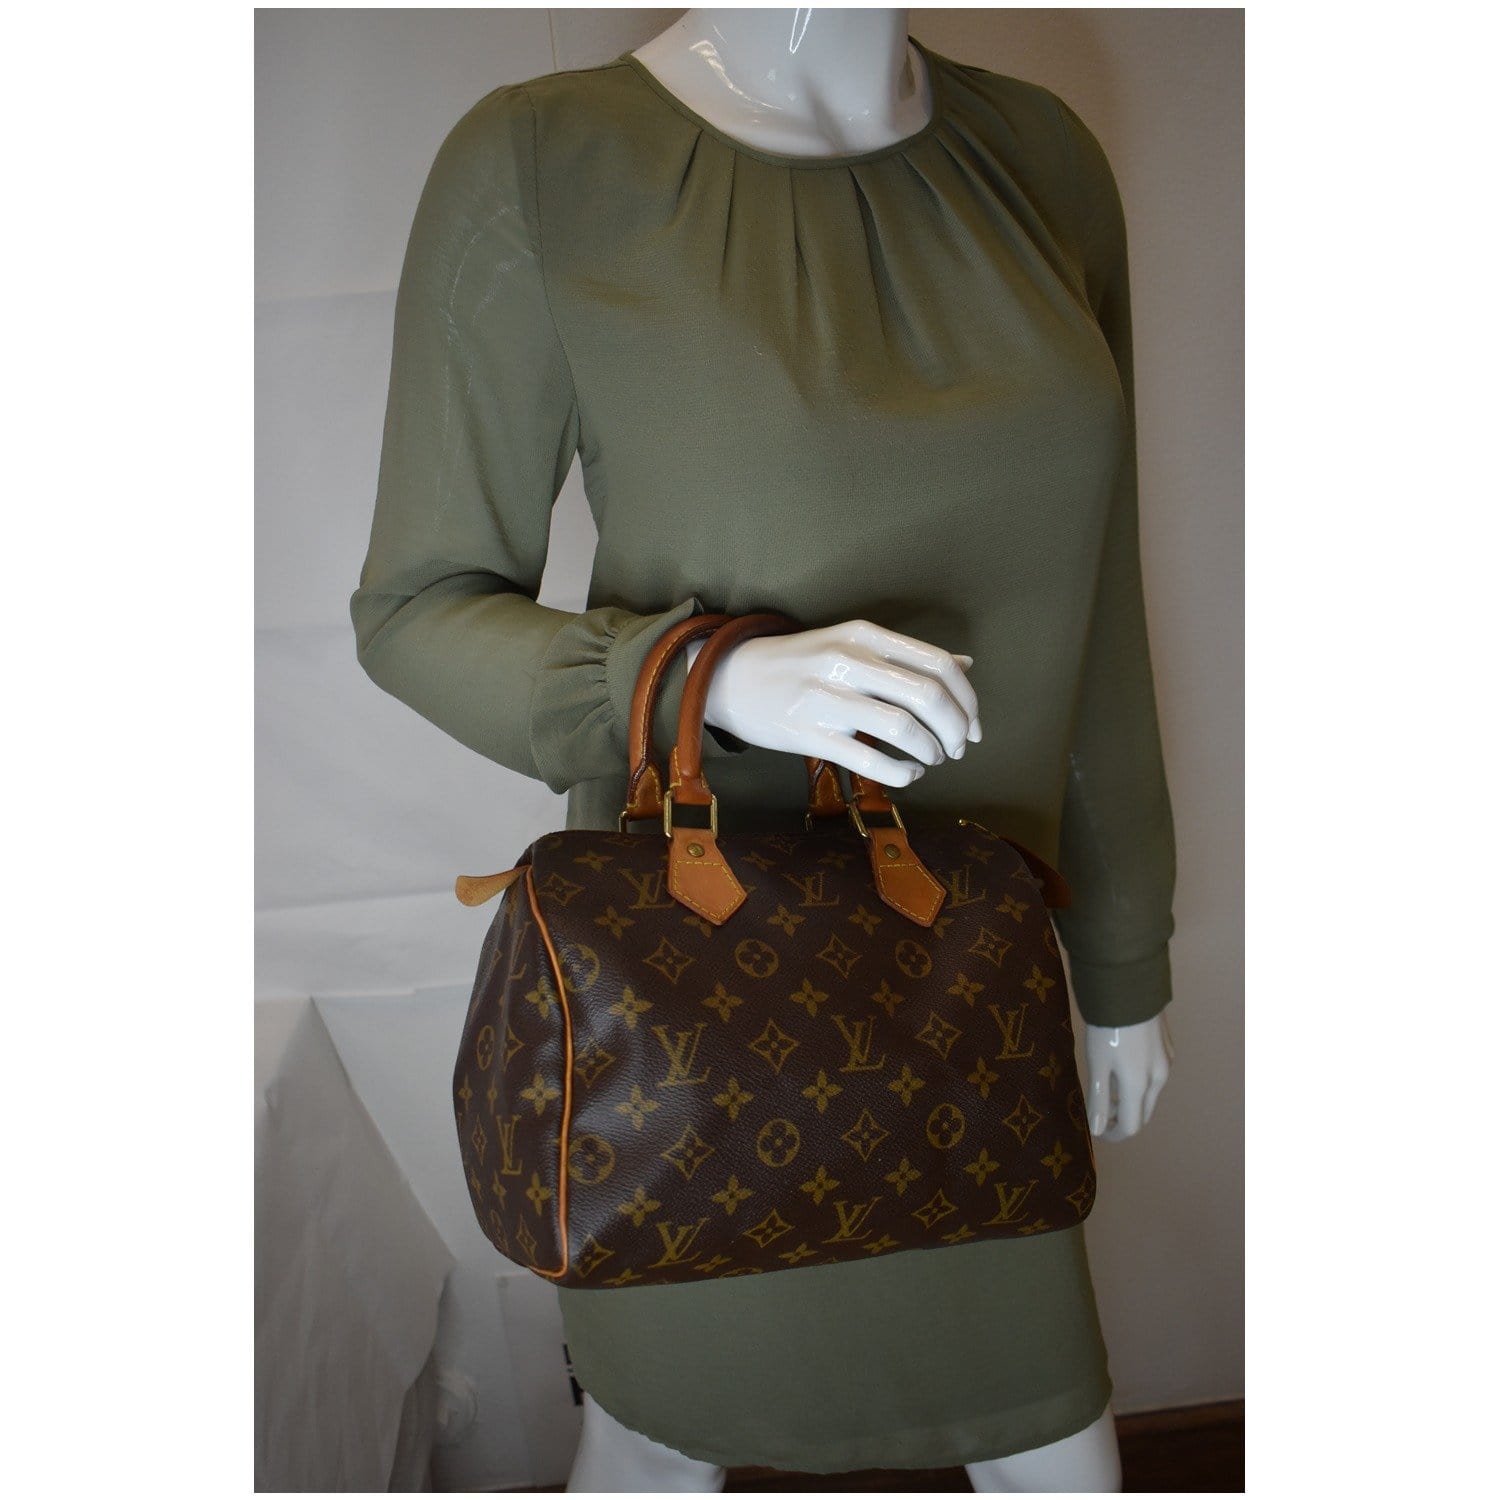 Louis Vuitton Speedy 25 monogram handbag bag satchel top handle